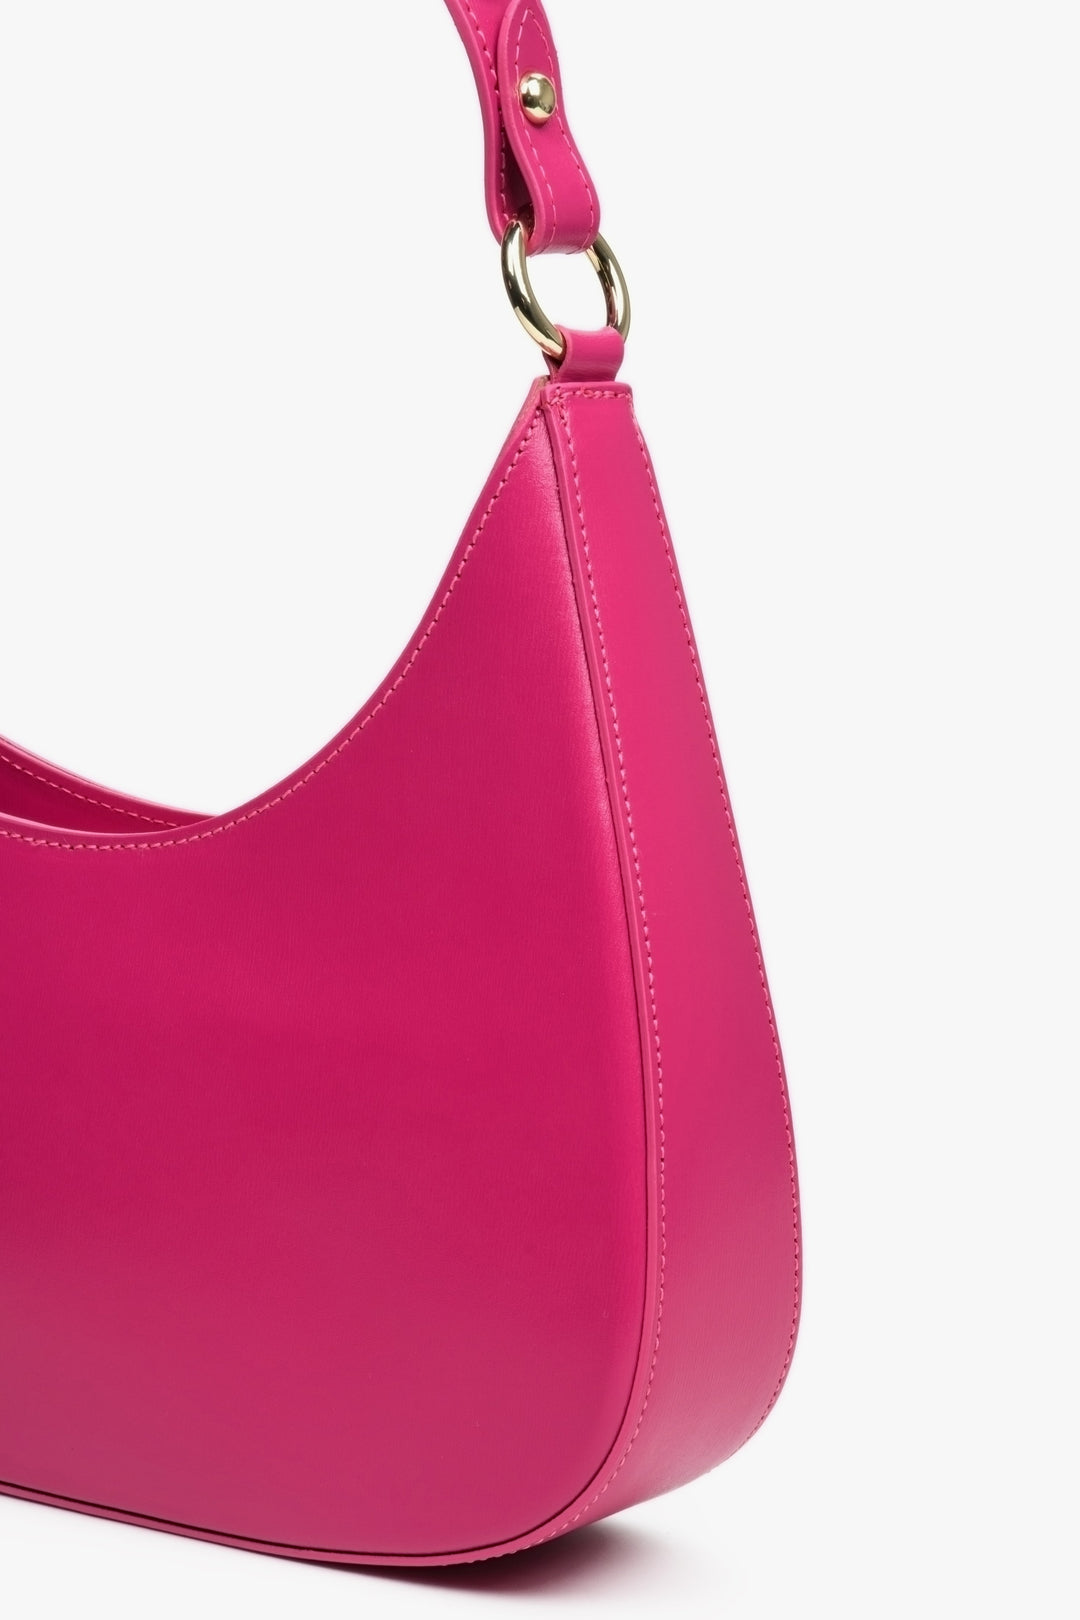 Women's Italian natural leather shoulder bag in pink.